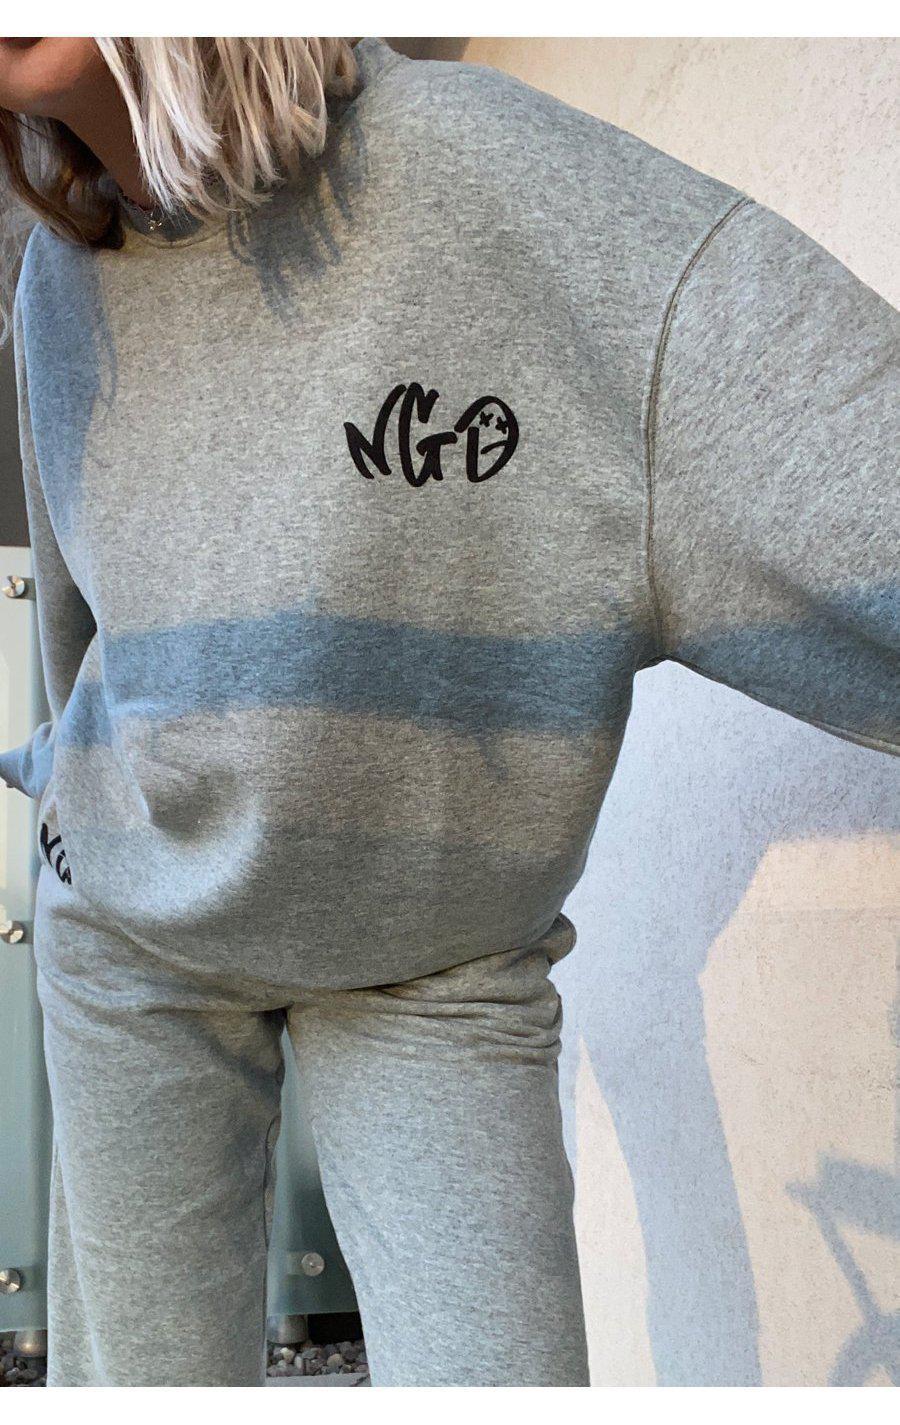 Buy New Girl Order Sage Graffiti Style Sweatshirt Top at Spoiled Brat  Online - UK online Fashion &amp; lifestyle boutique